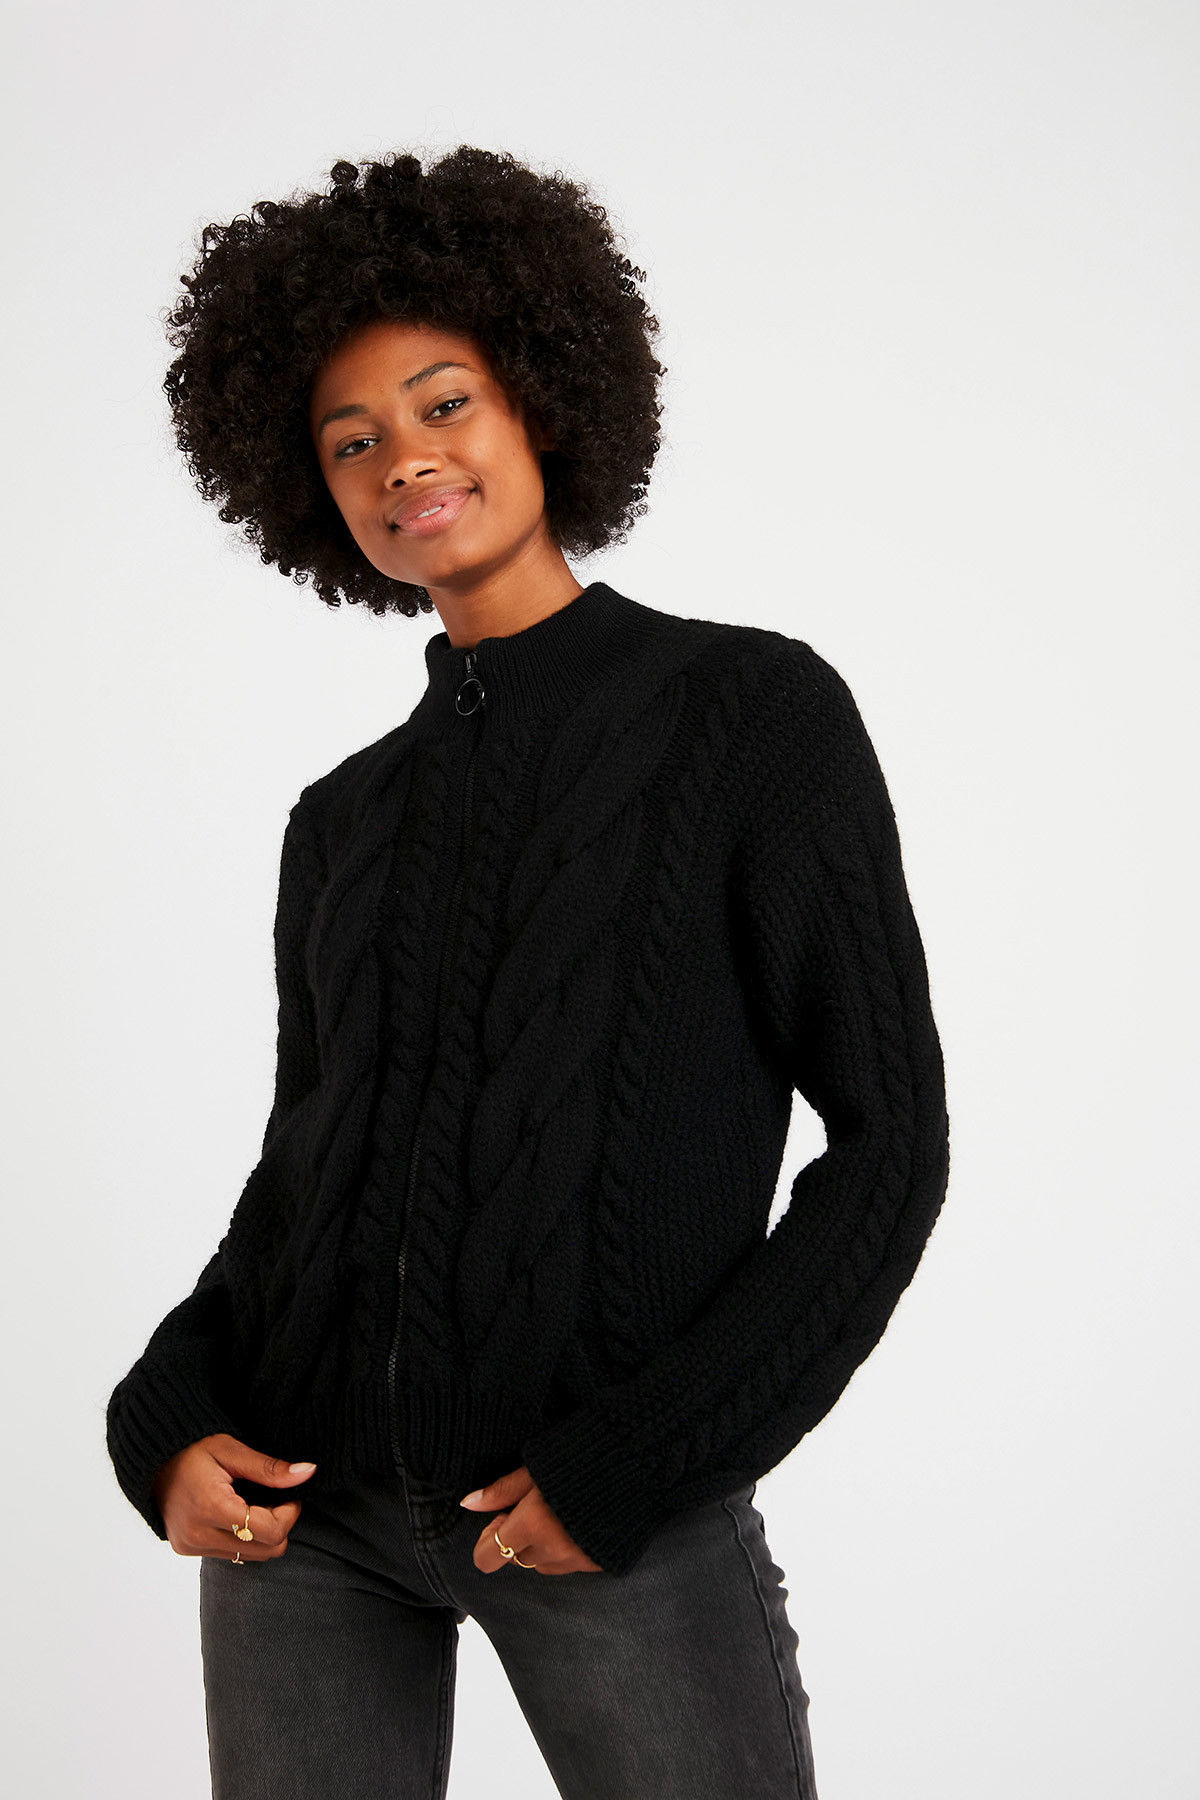 Women's black cable knit cardigan | SIDLEY CHOCTAW | Banana Moon ...